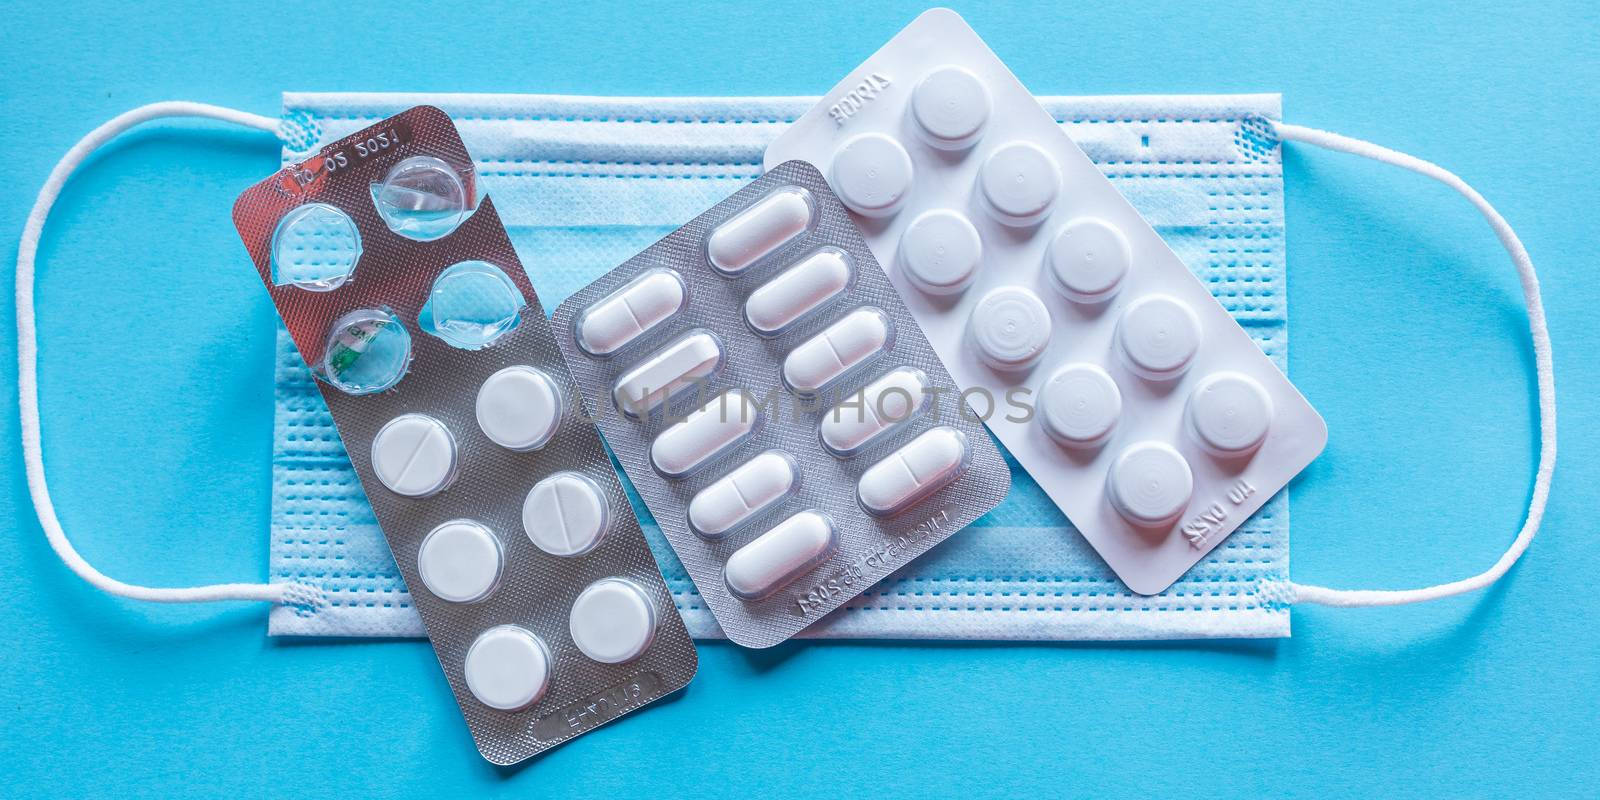 Health care prevention medical tablets pills on face mask - viru by adamr